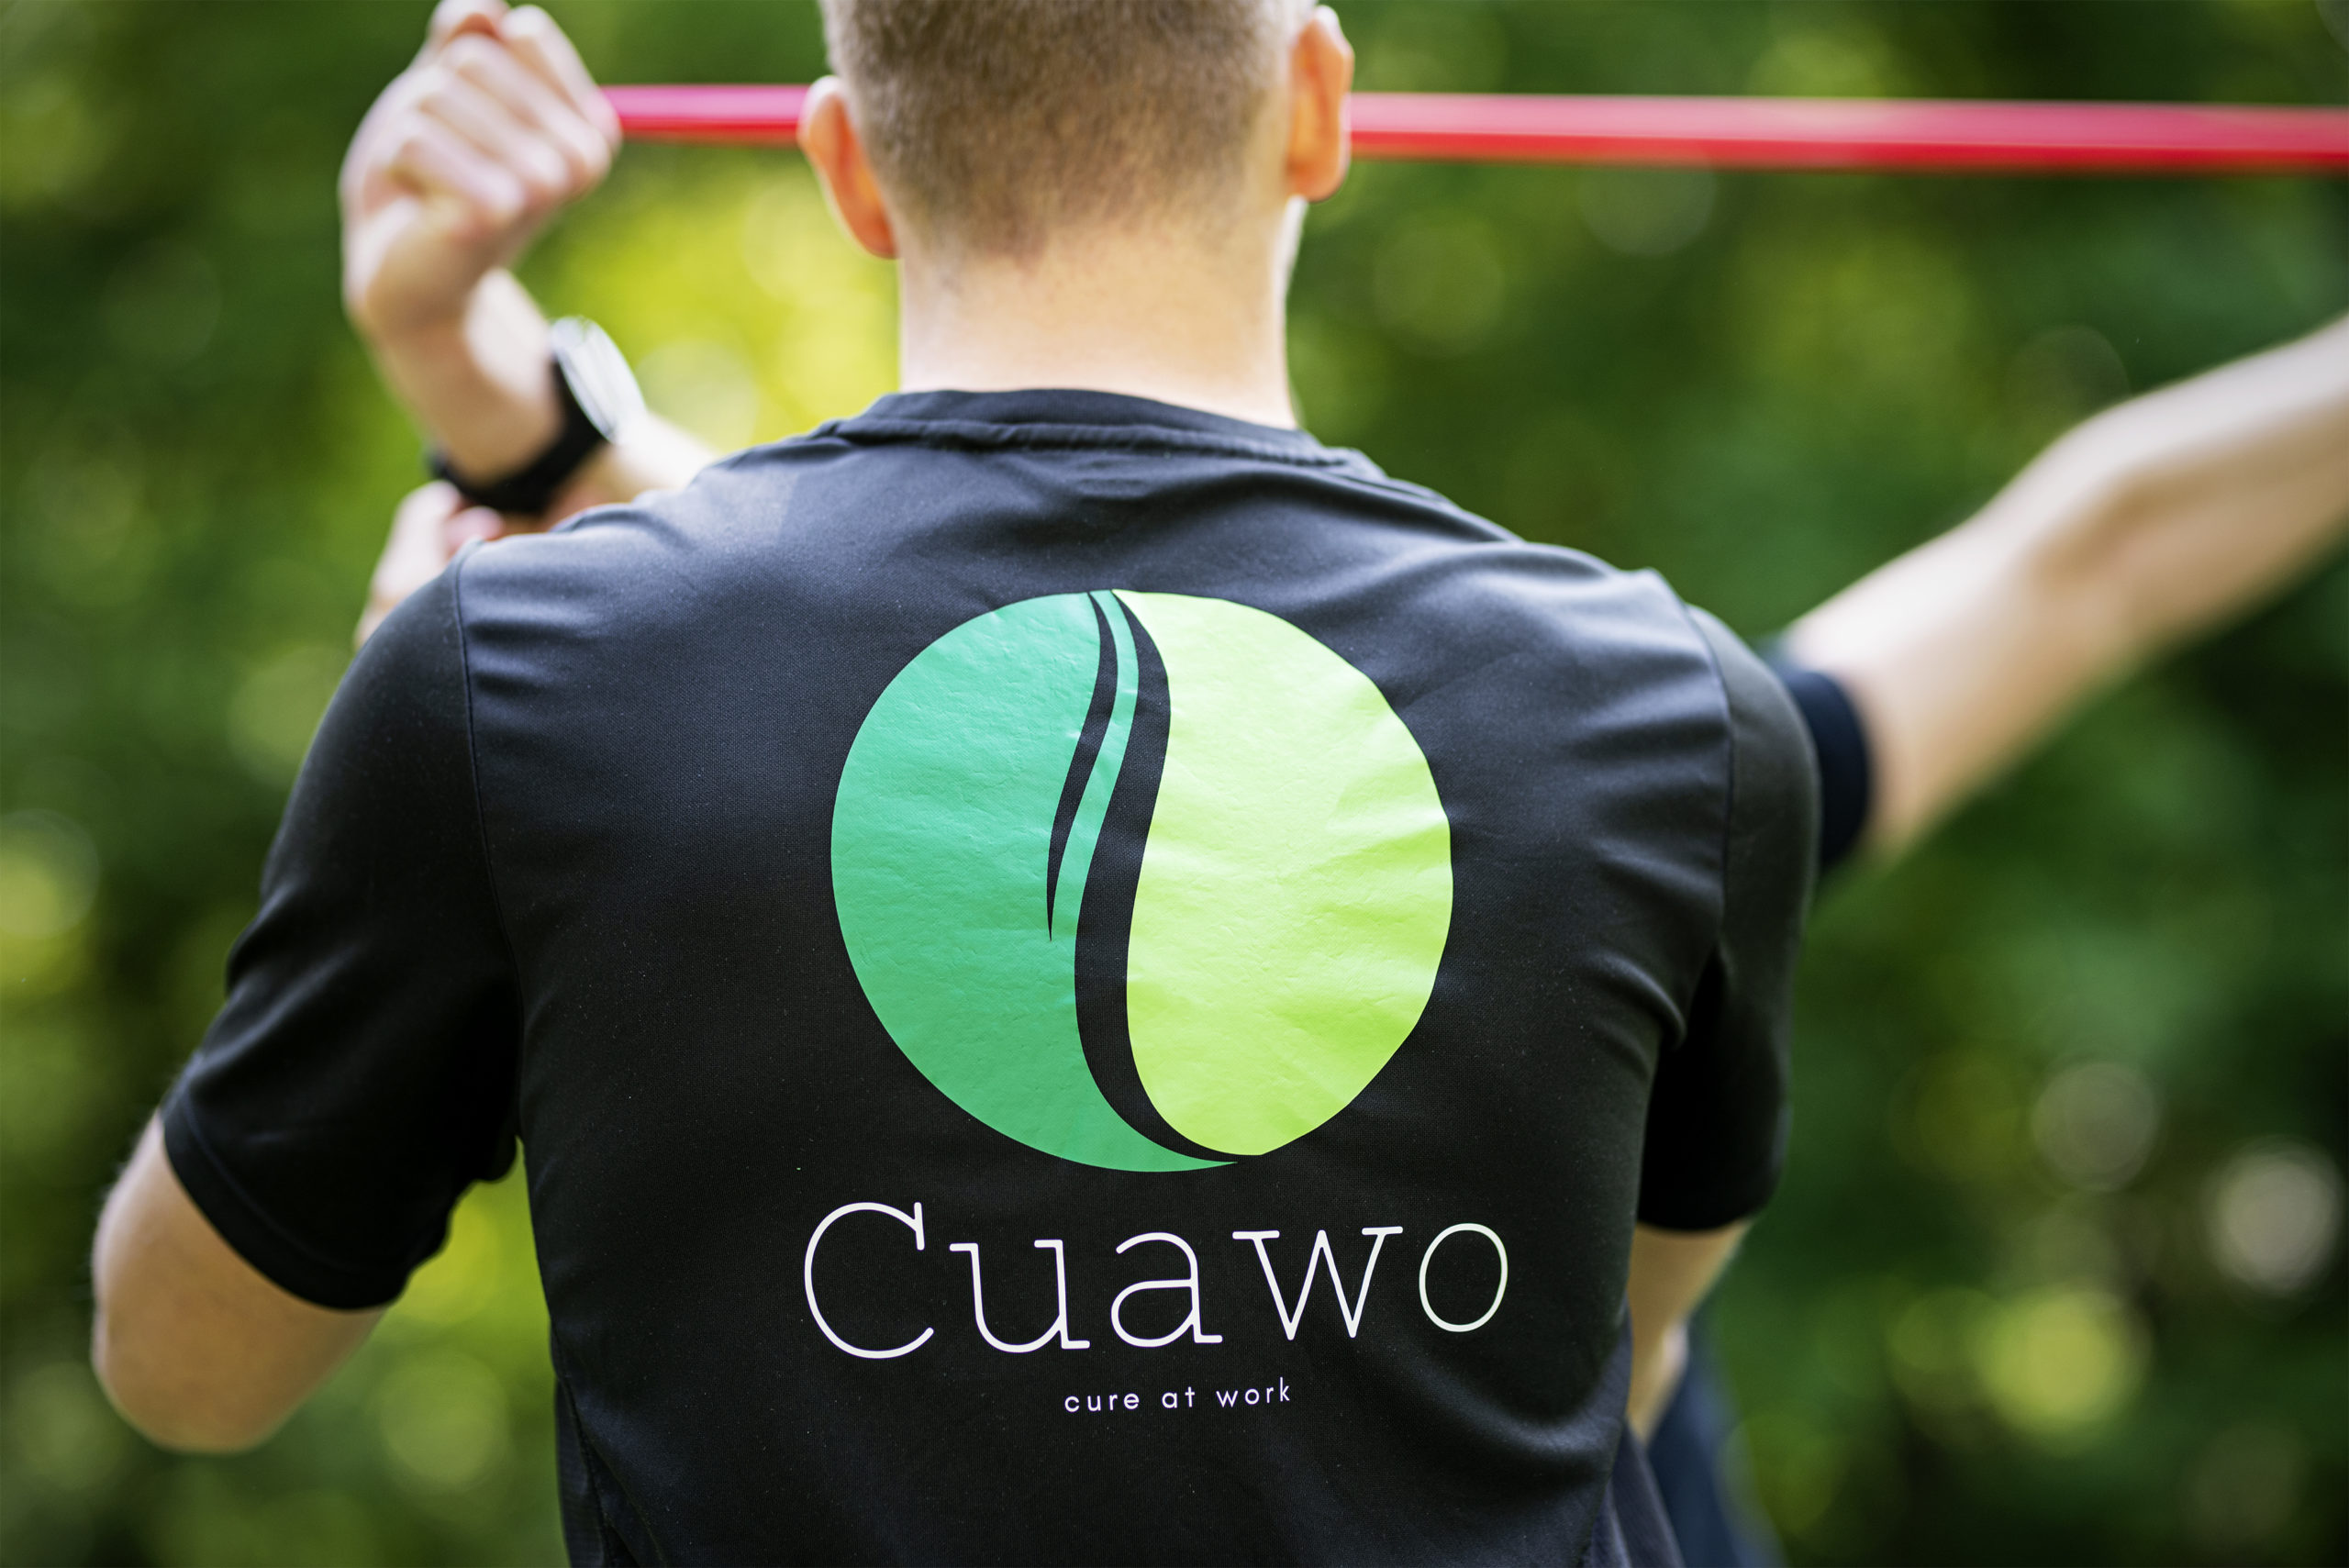 Cuawo_Cure_at_Work_Logo